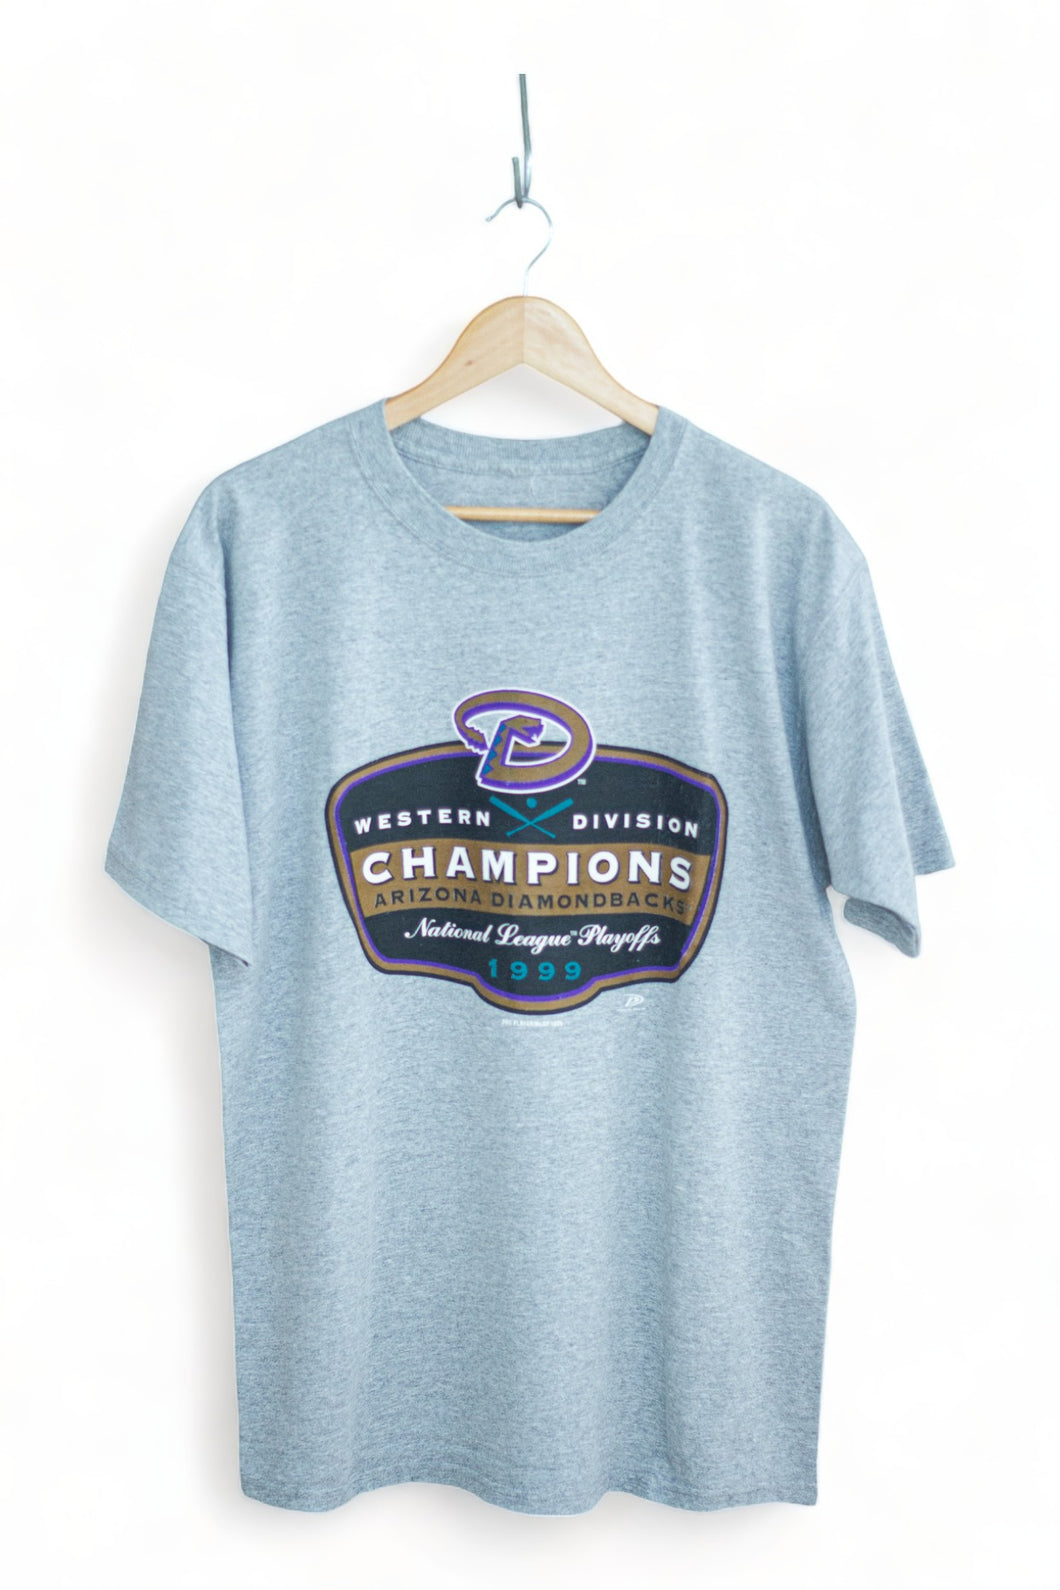 Arizona Diamondbacks - 1999 Western Division Champions T-Shirt (L)